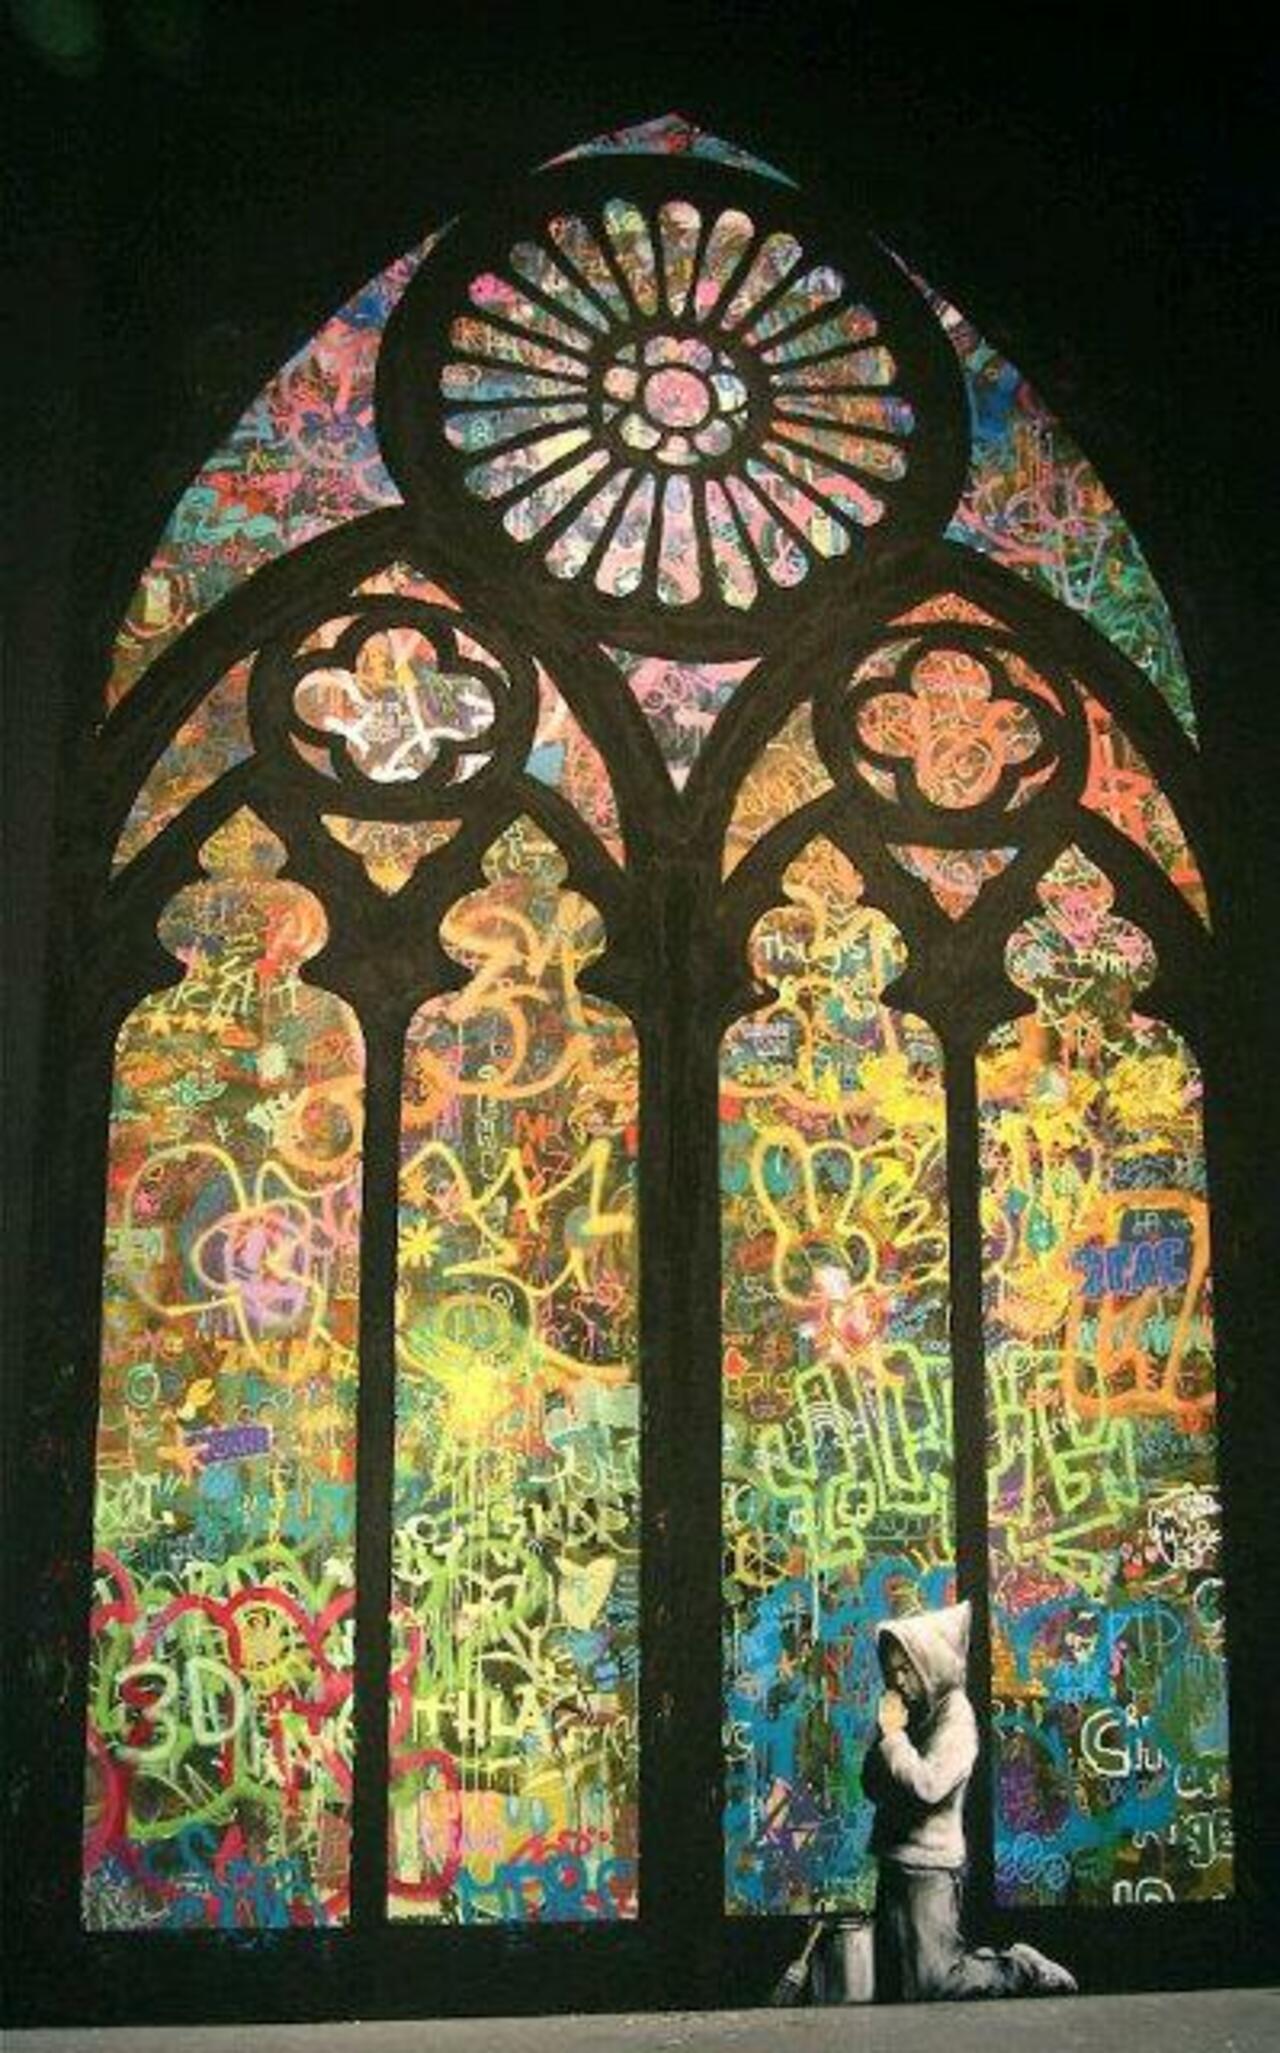 "@HolyStreetArt: Forgive Us Our Trespasses. Happy Sunday! #Graffiti #StreetArt #UrbanArt #Art #Dope  http://t.co/iShZTCn7vC” #pray"